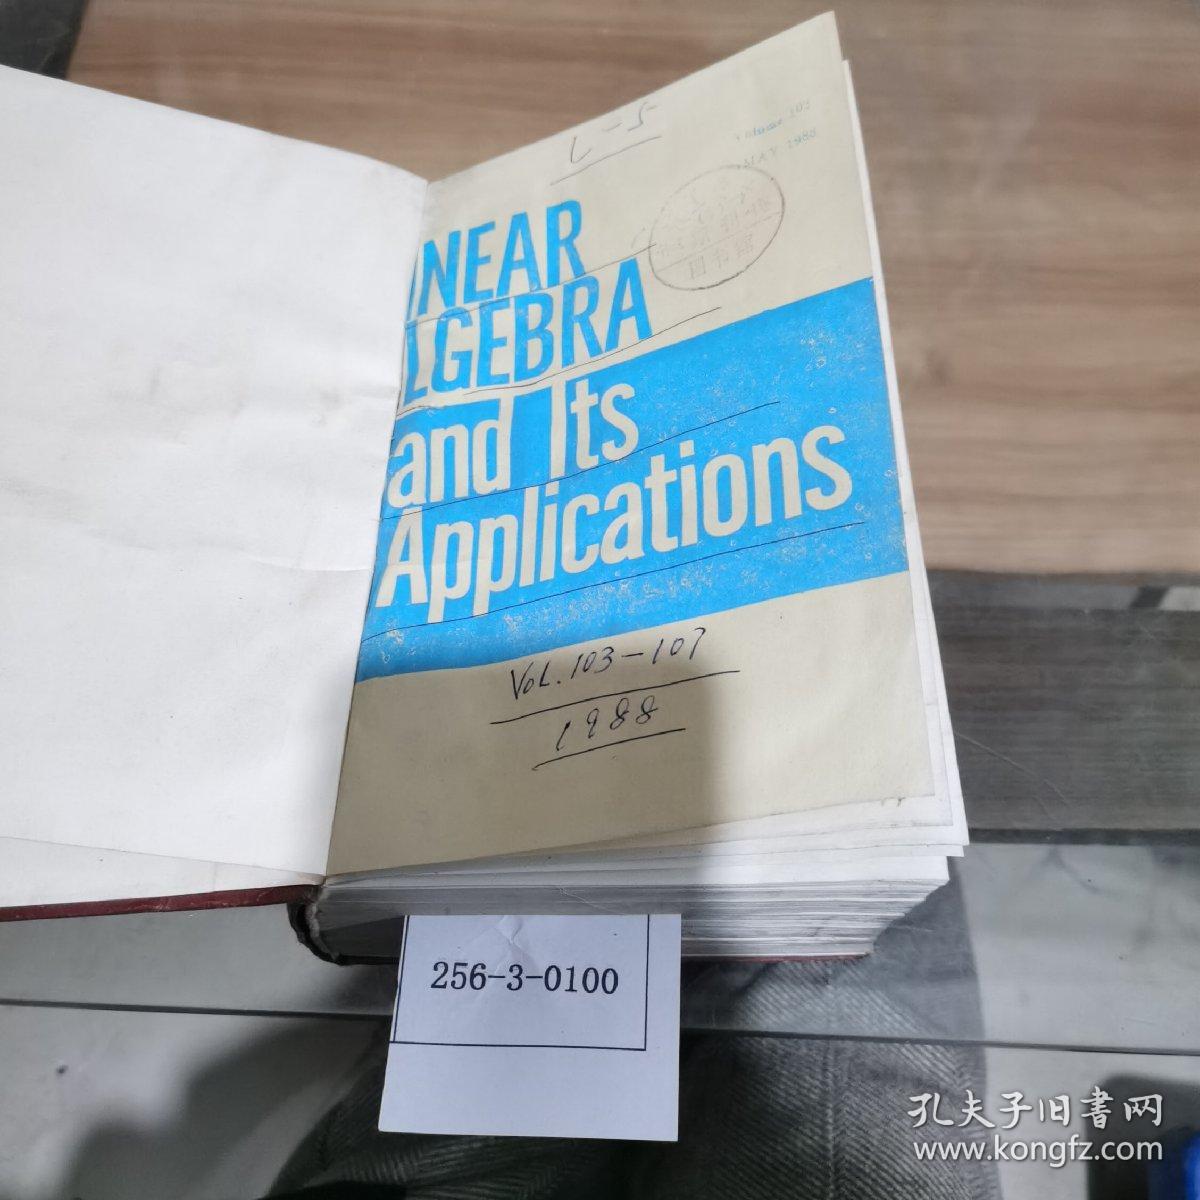 linear algebra and its applications 1988年103~107期